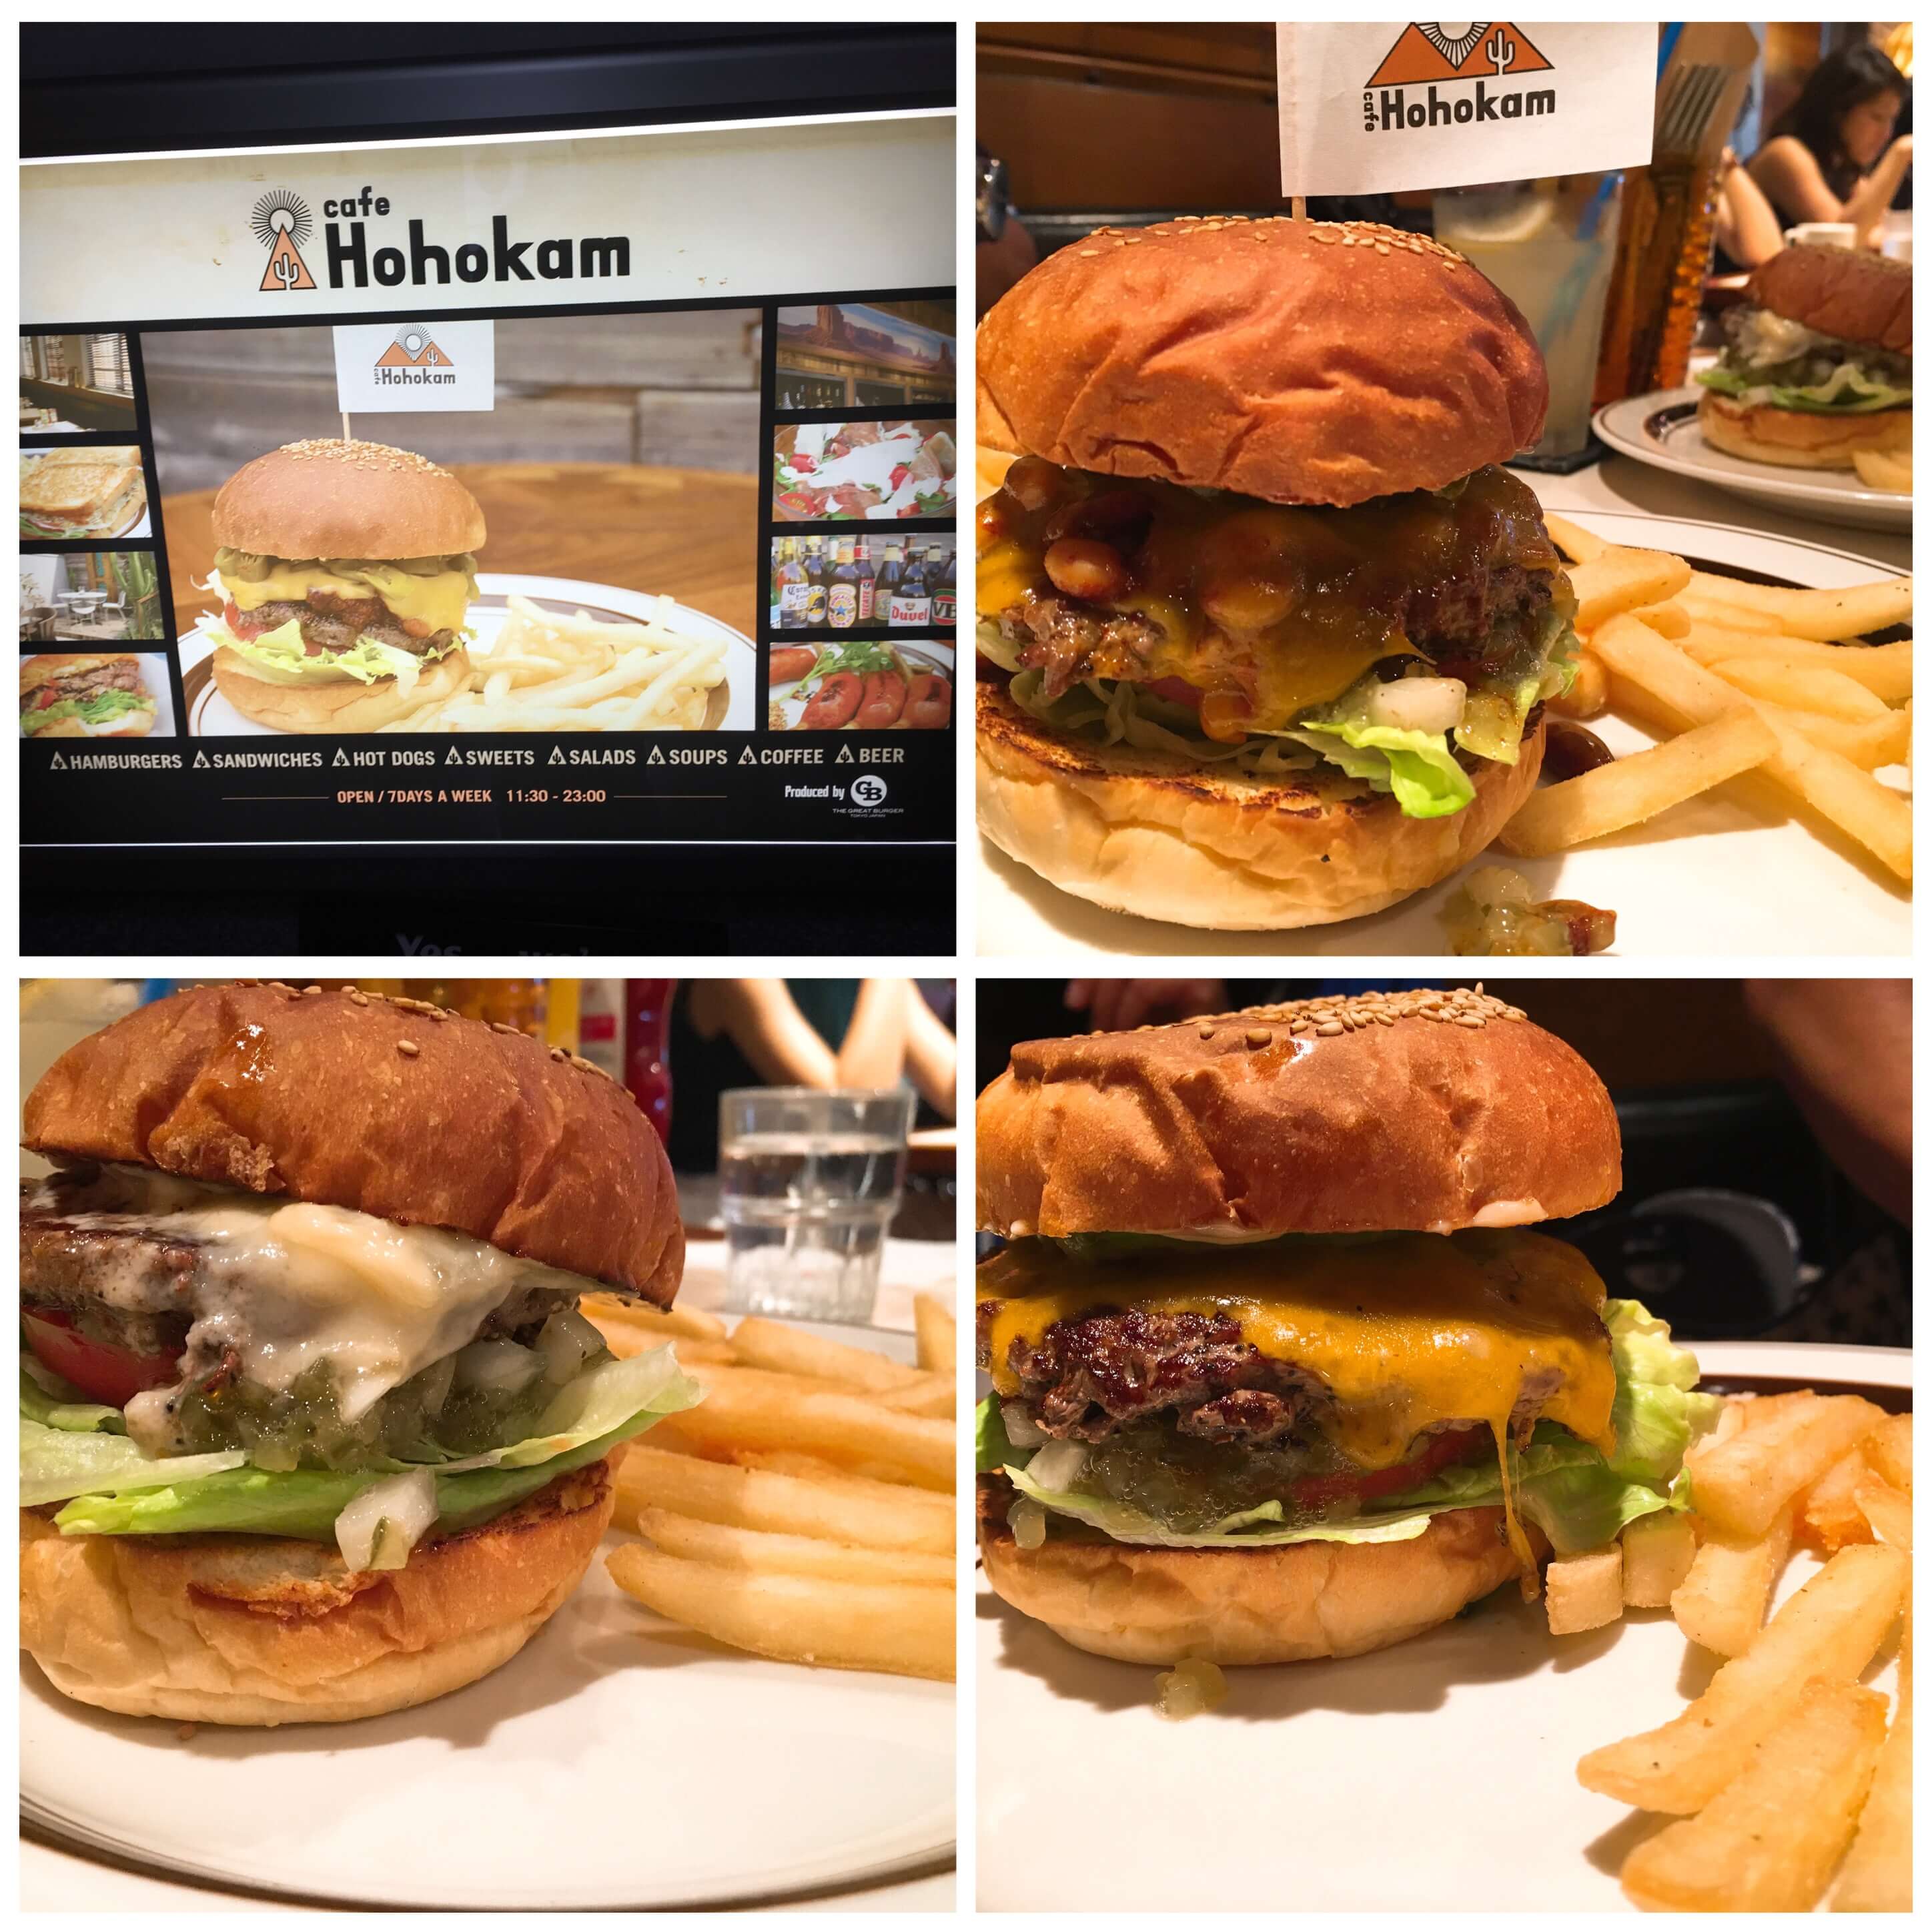 Cafe Hohokam 原宿 長居できるハンバーガー屋 メニューも豊富で雰囲気も最高 リケダン食べ歩きブログ